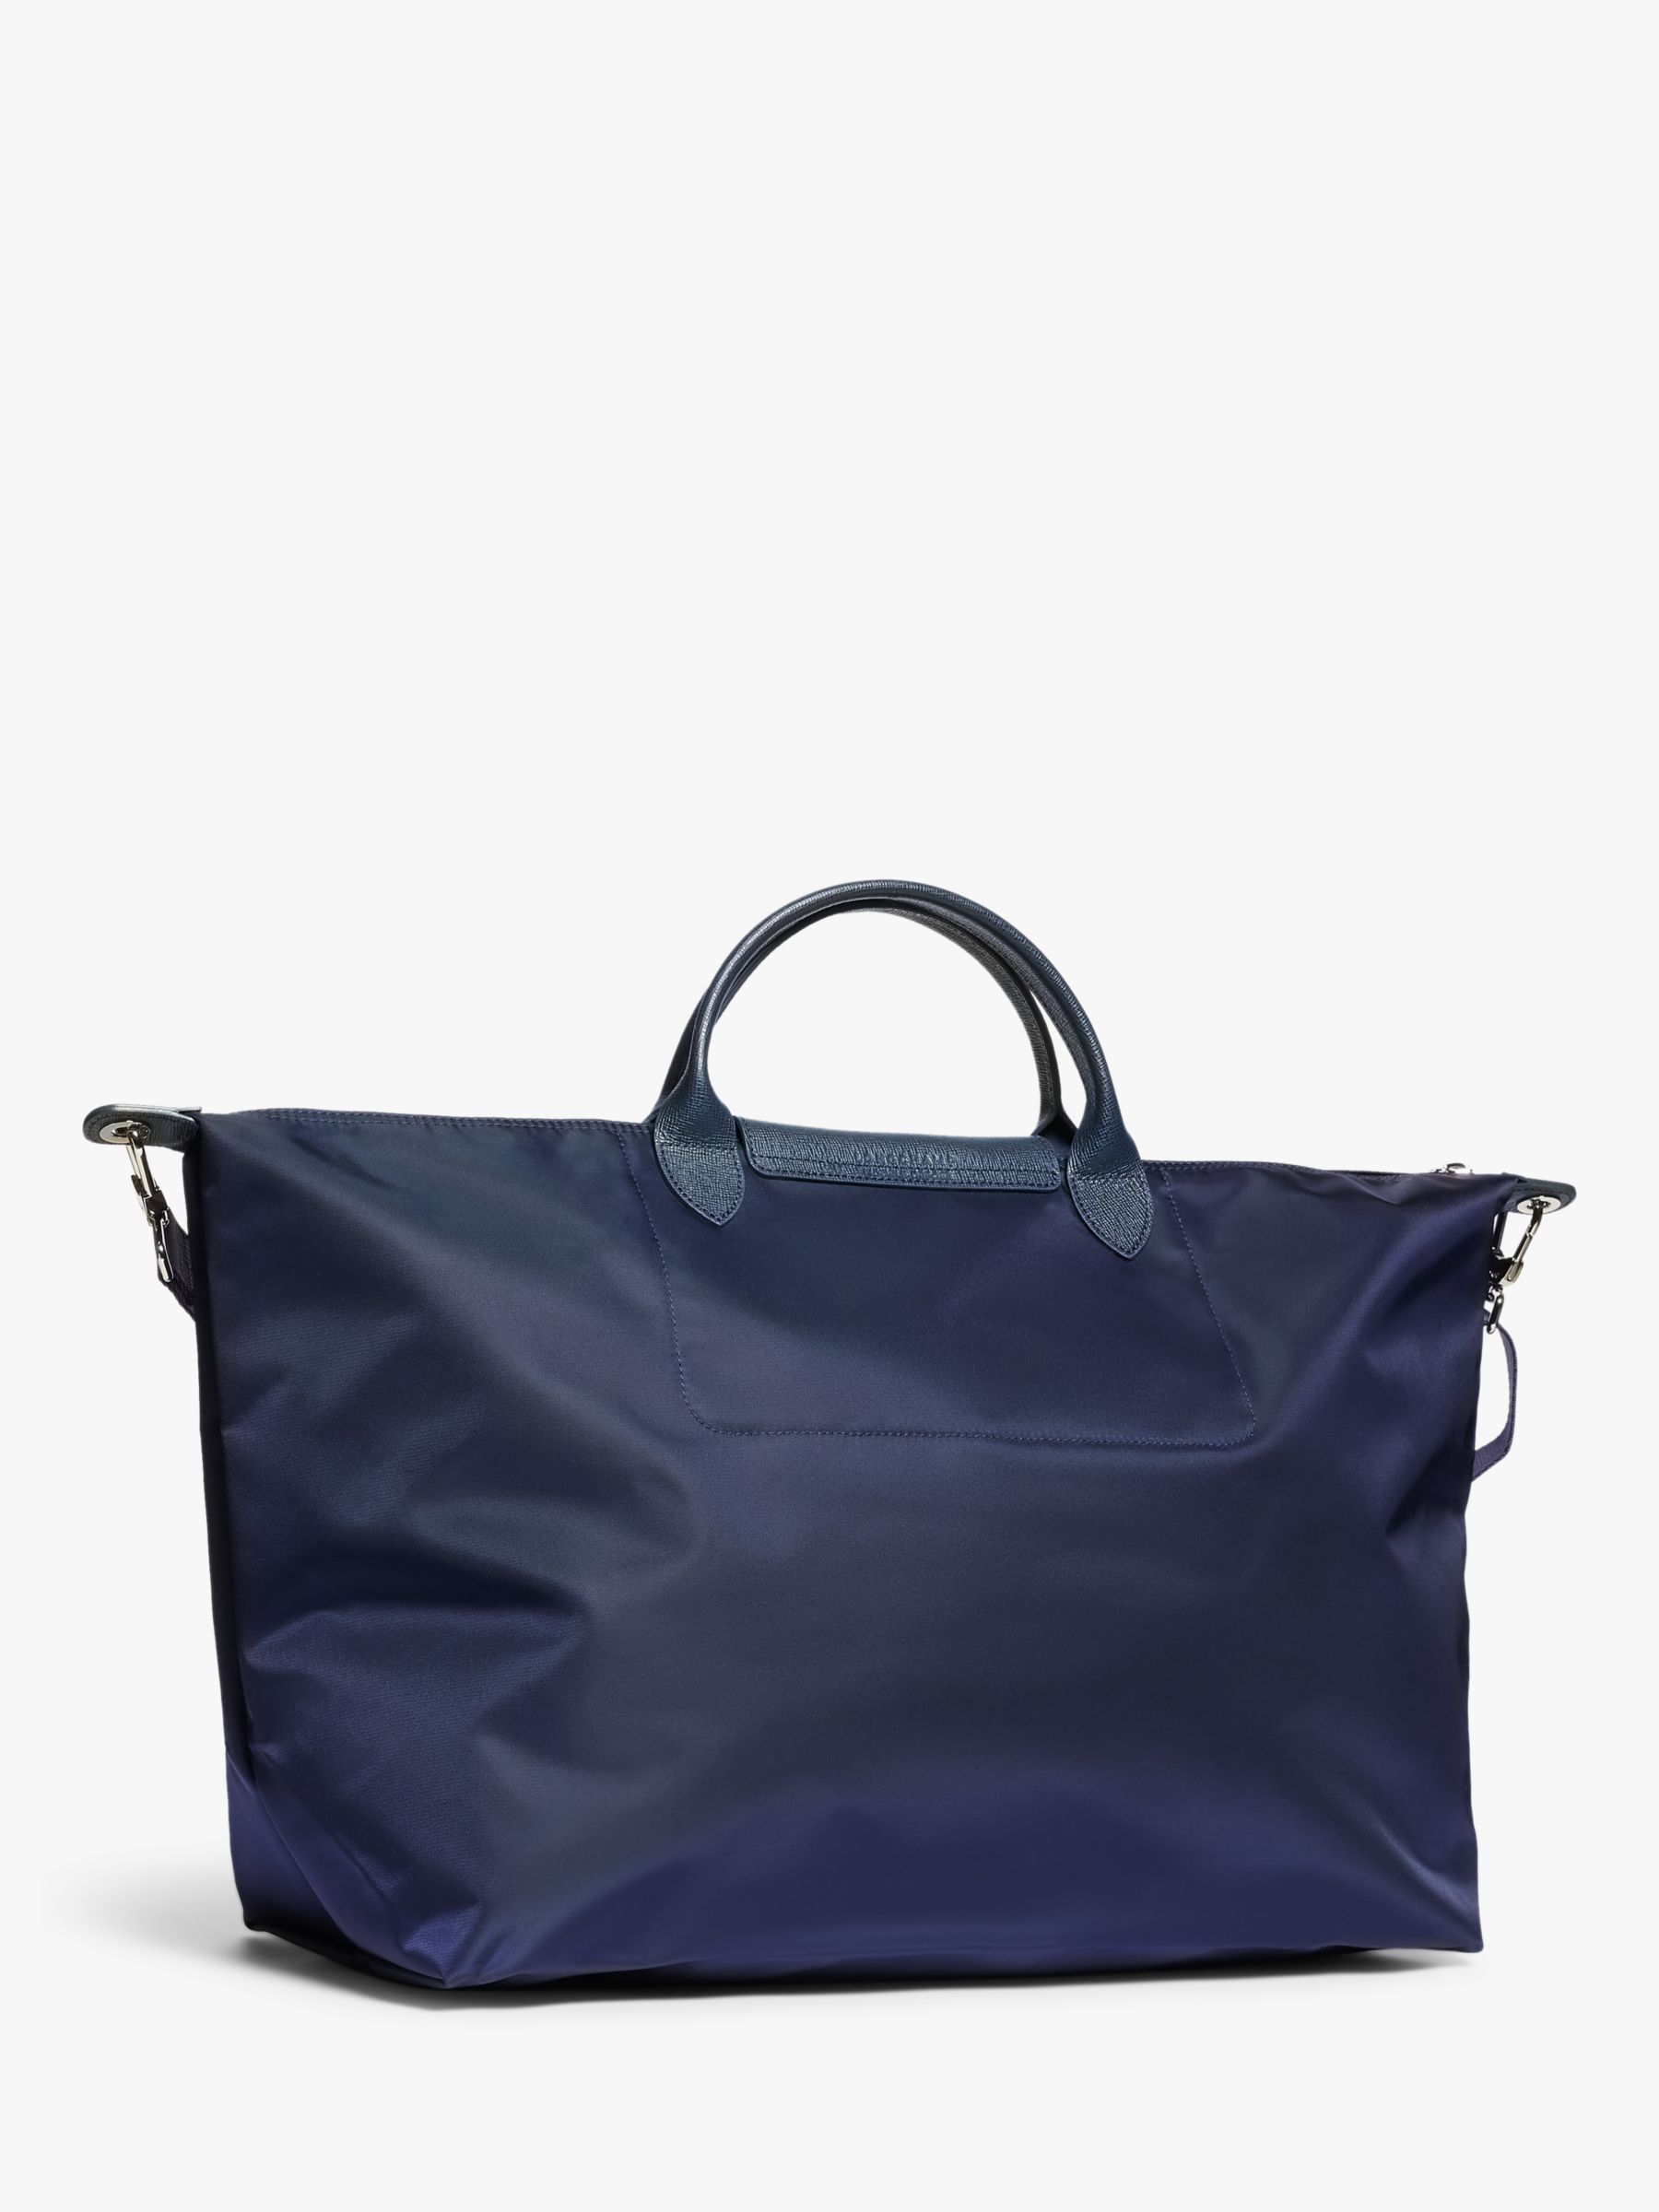 Longchamp Le Pliage Néo Travel Bag, Navy at John Lewis & Partners